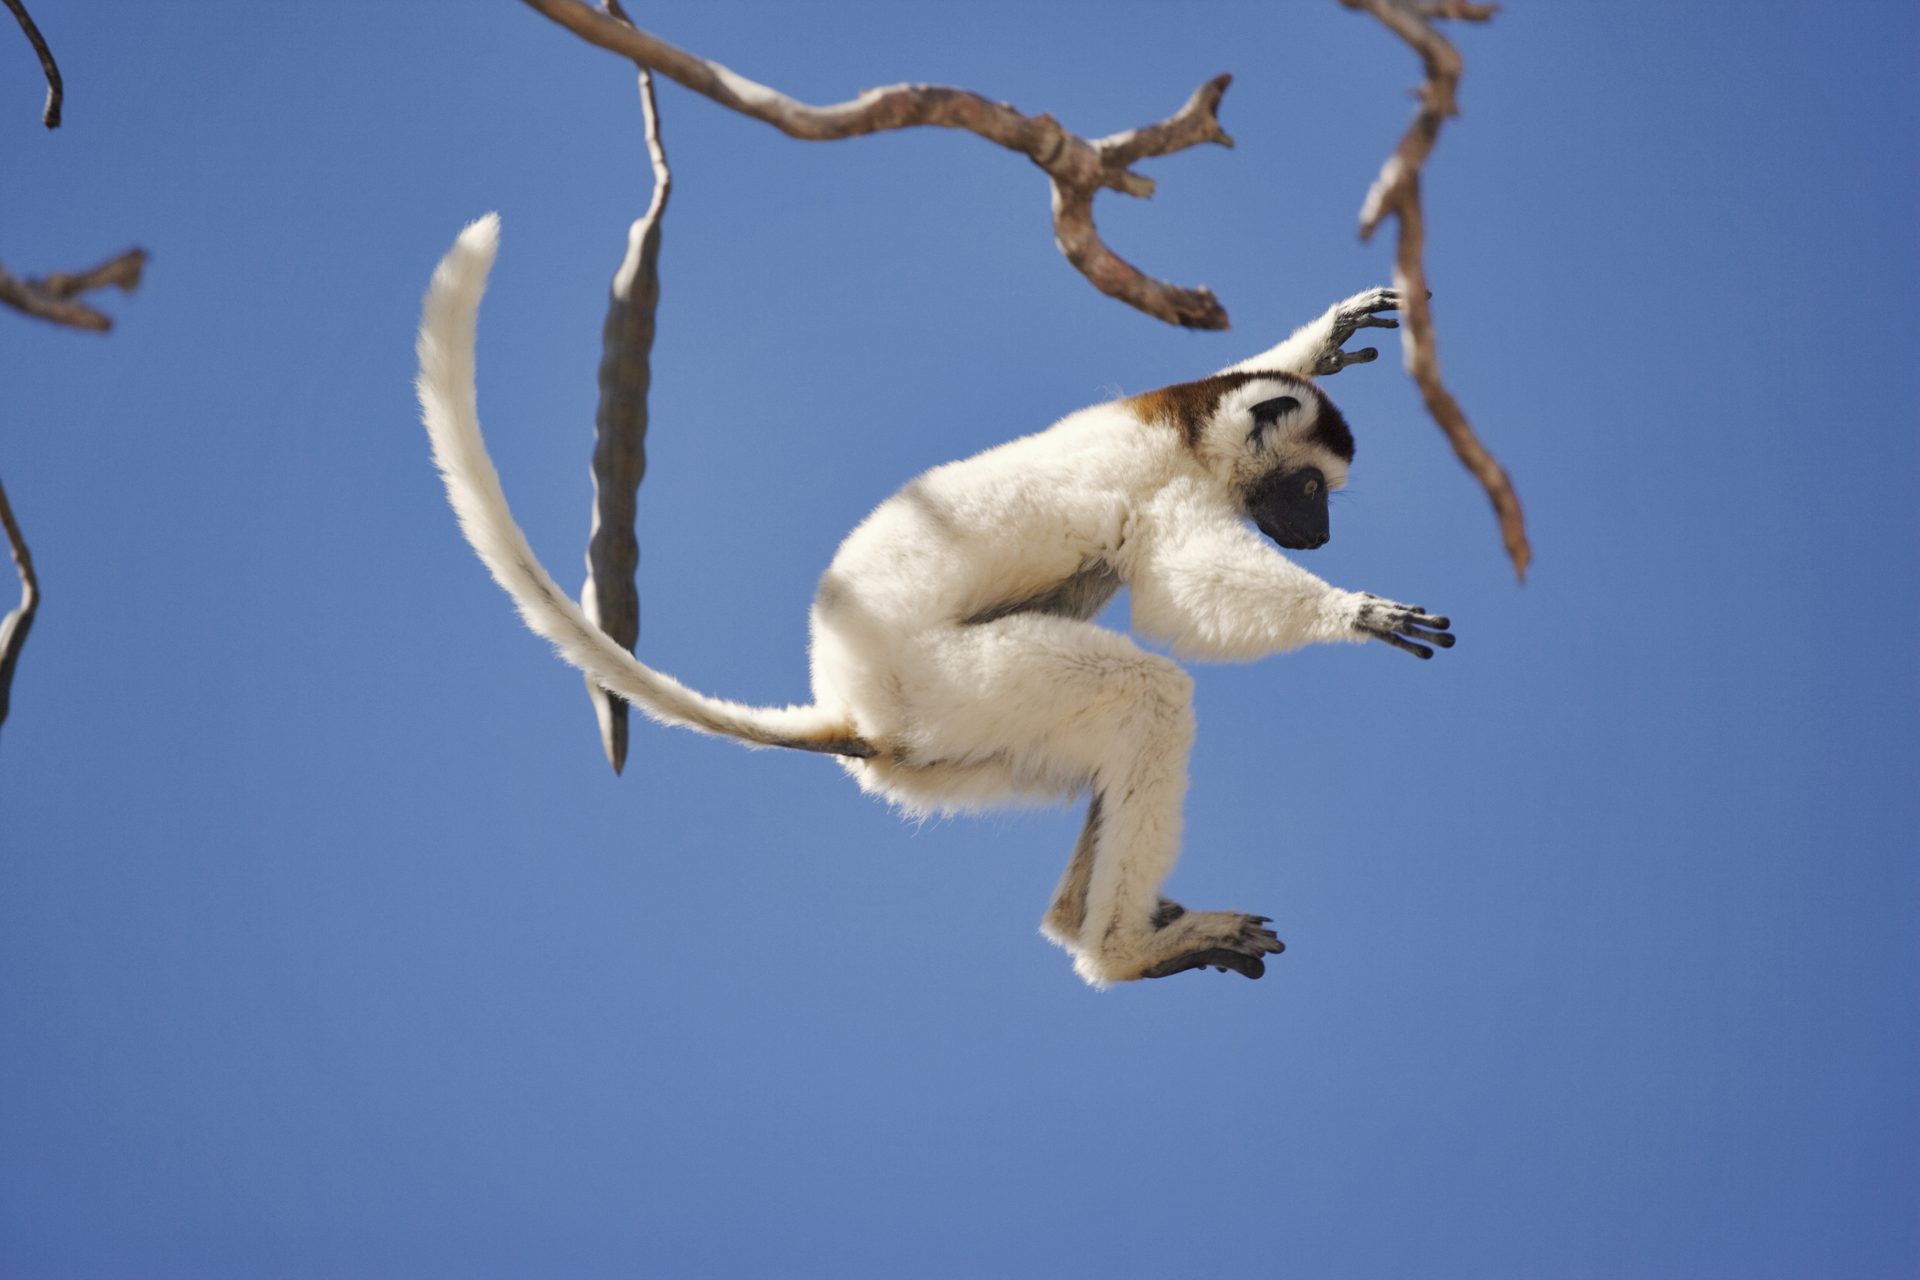 In Madagascar